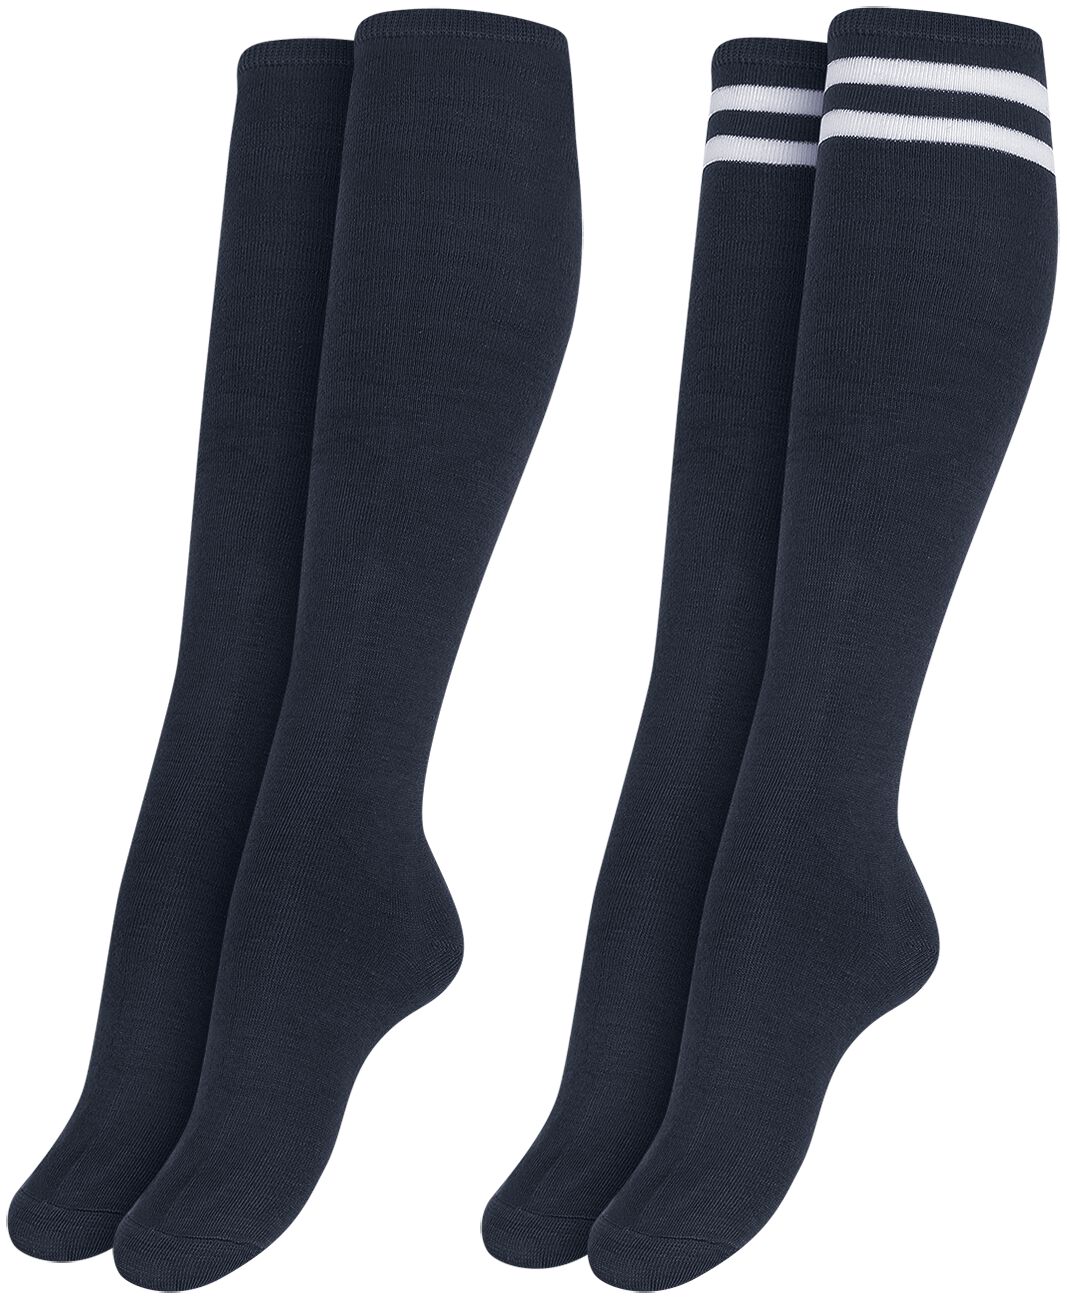 Urban Classics Kniestrümpfe - Ladies College Socks 2-Pack - EU 35-38 - für Damen - Größe EU 35-38 - navy